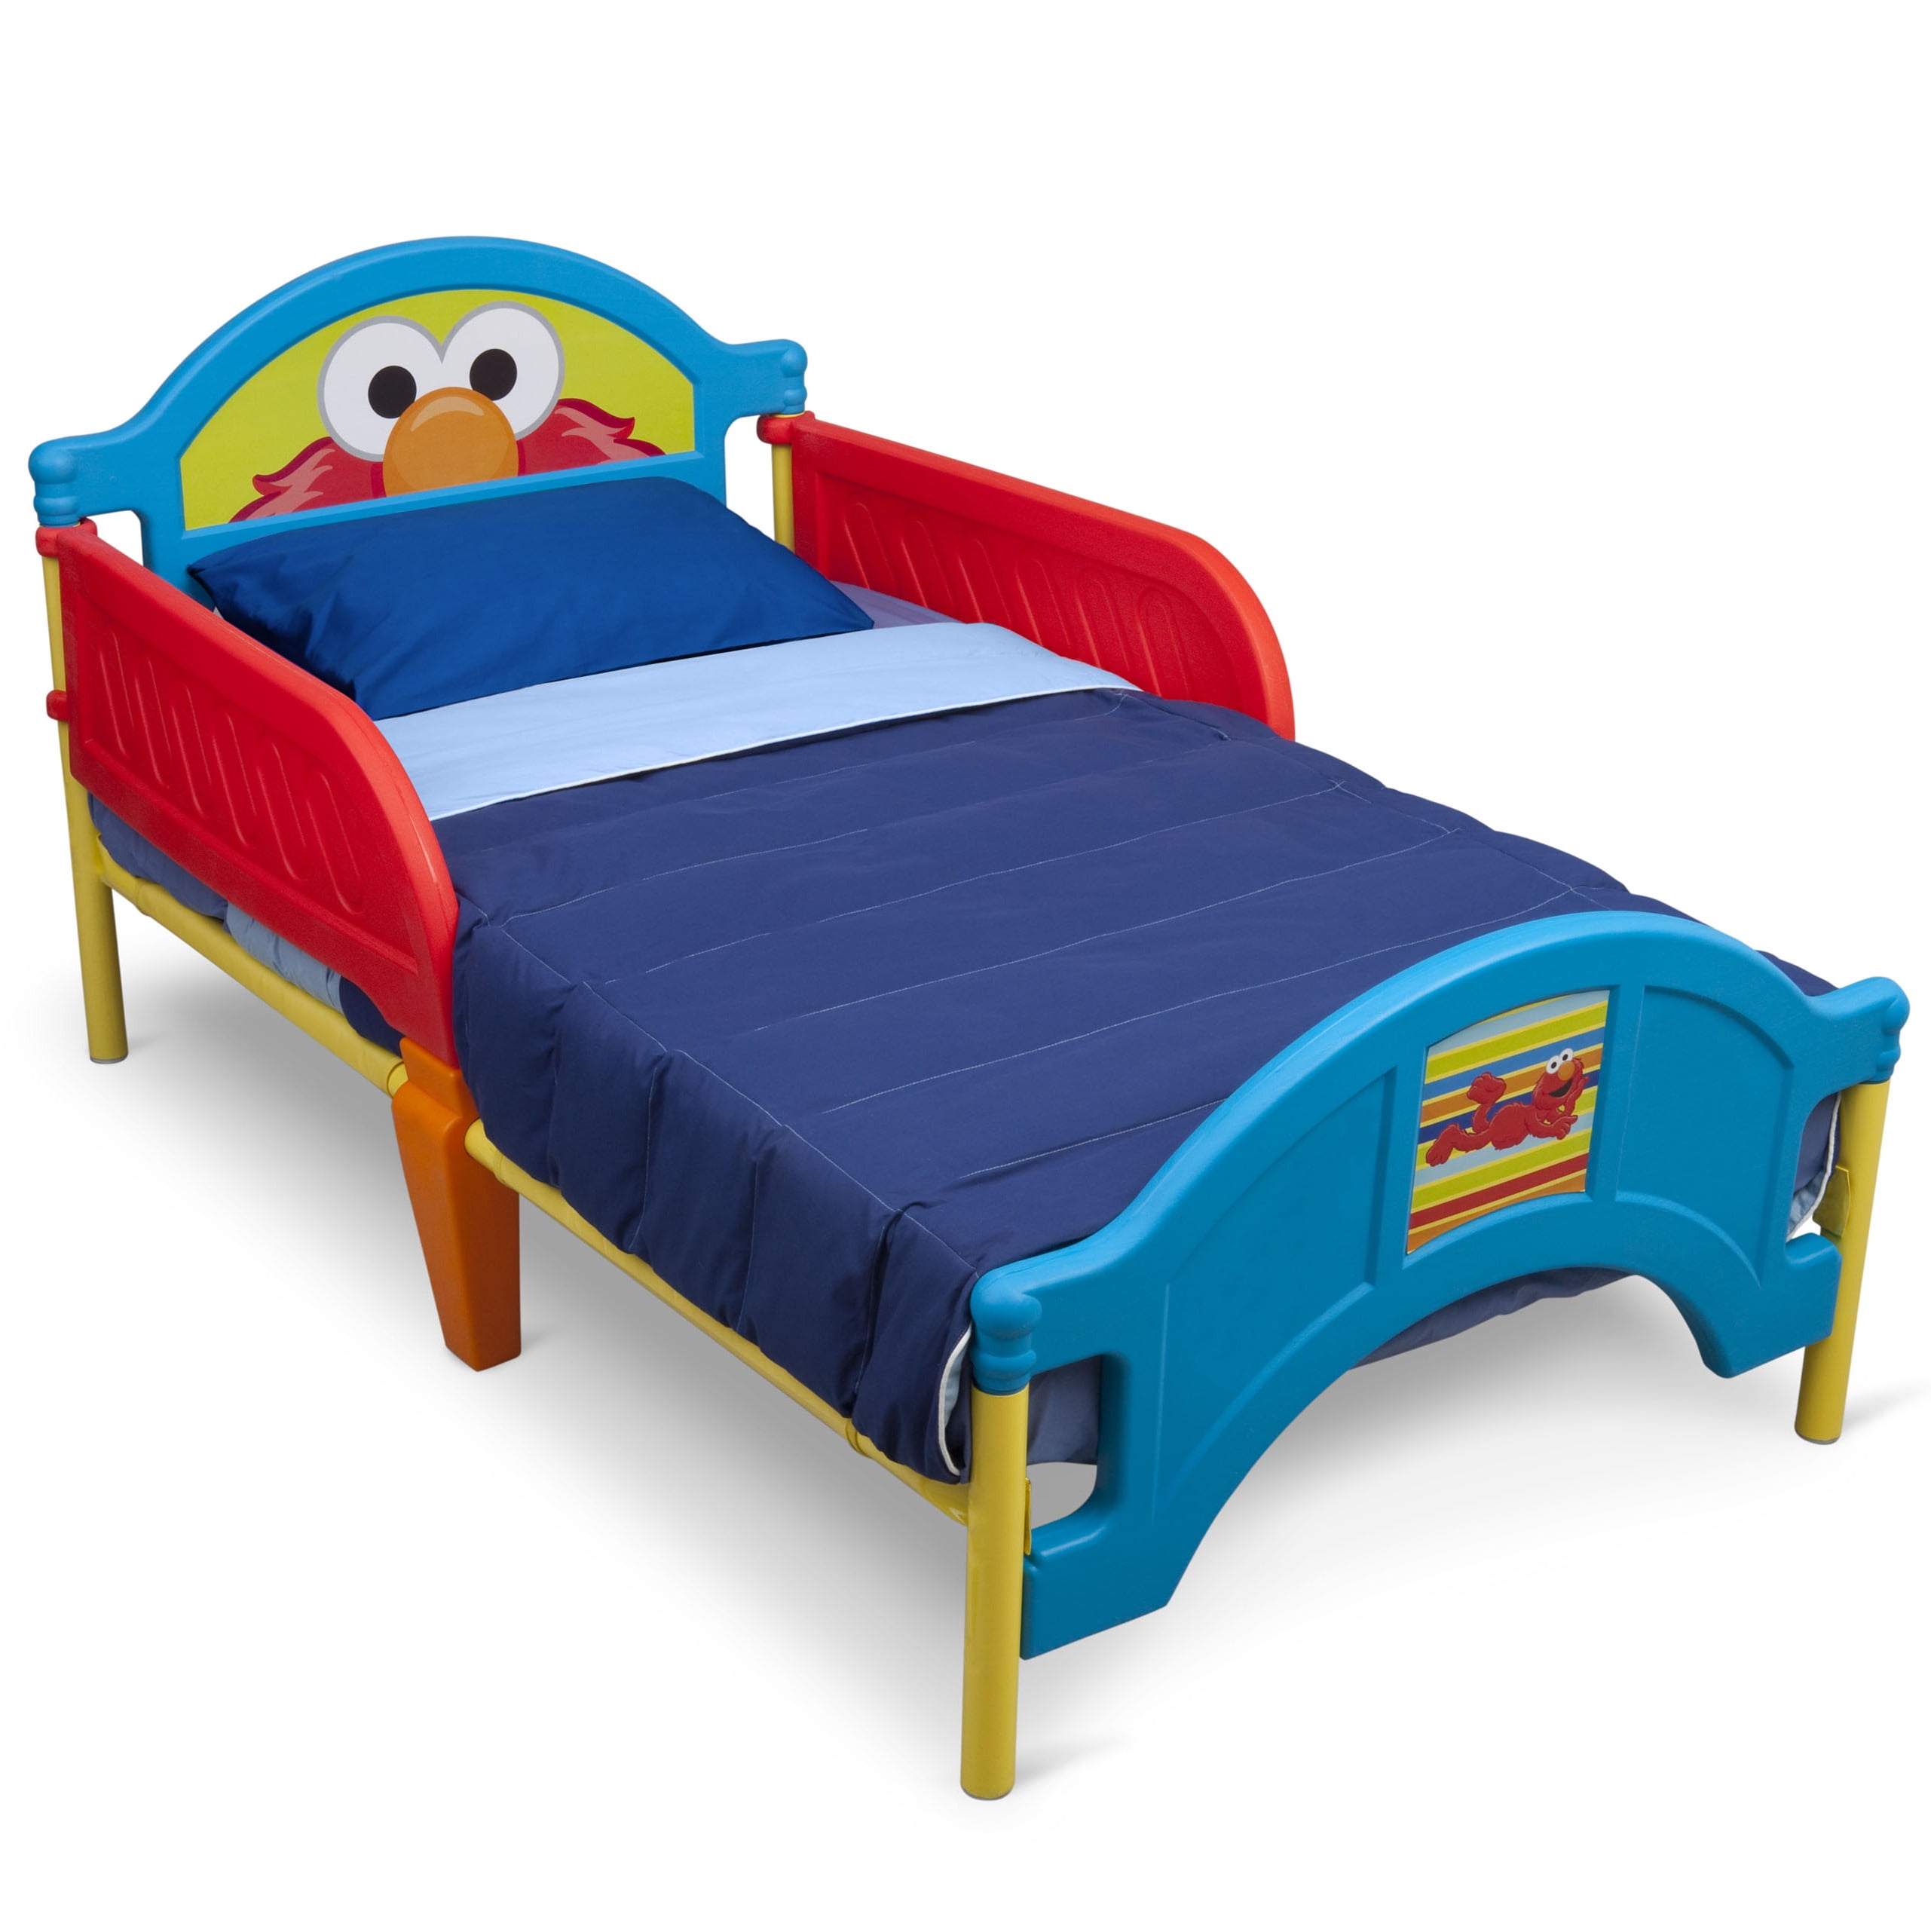 Delta Children Sesame Street Elmo Plastic Toddler Bed Red and Blue Safety New 